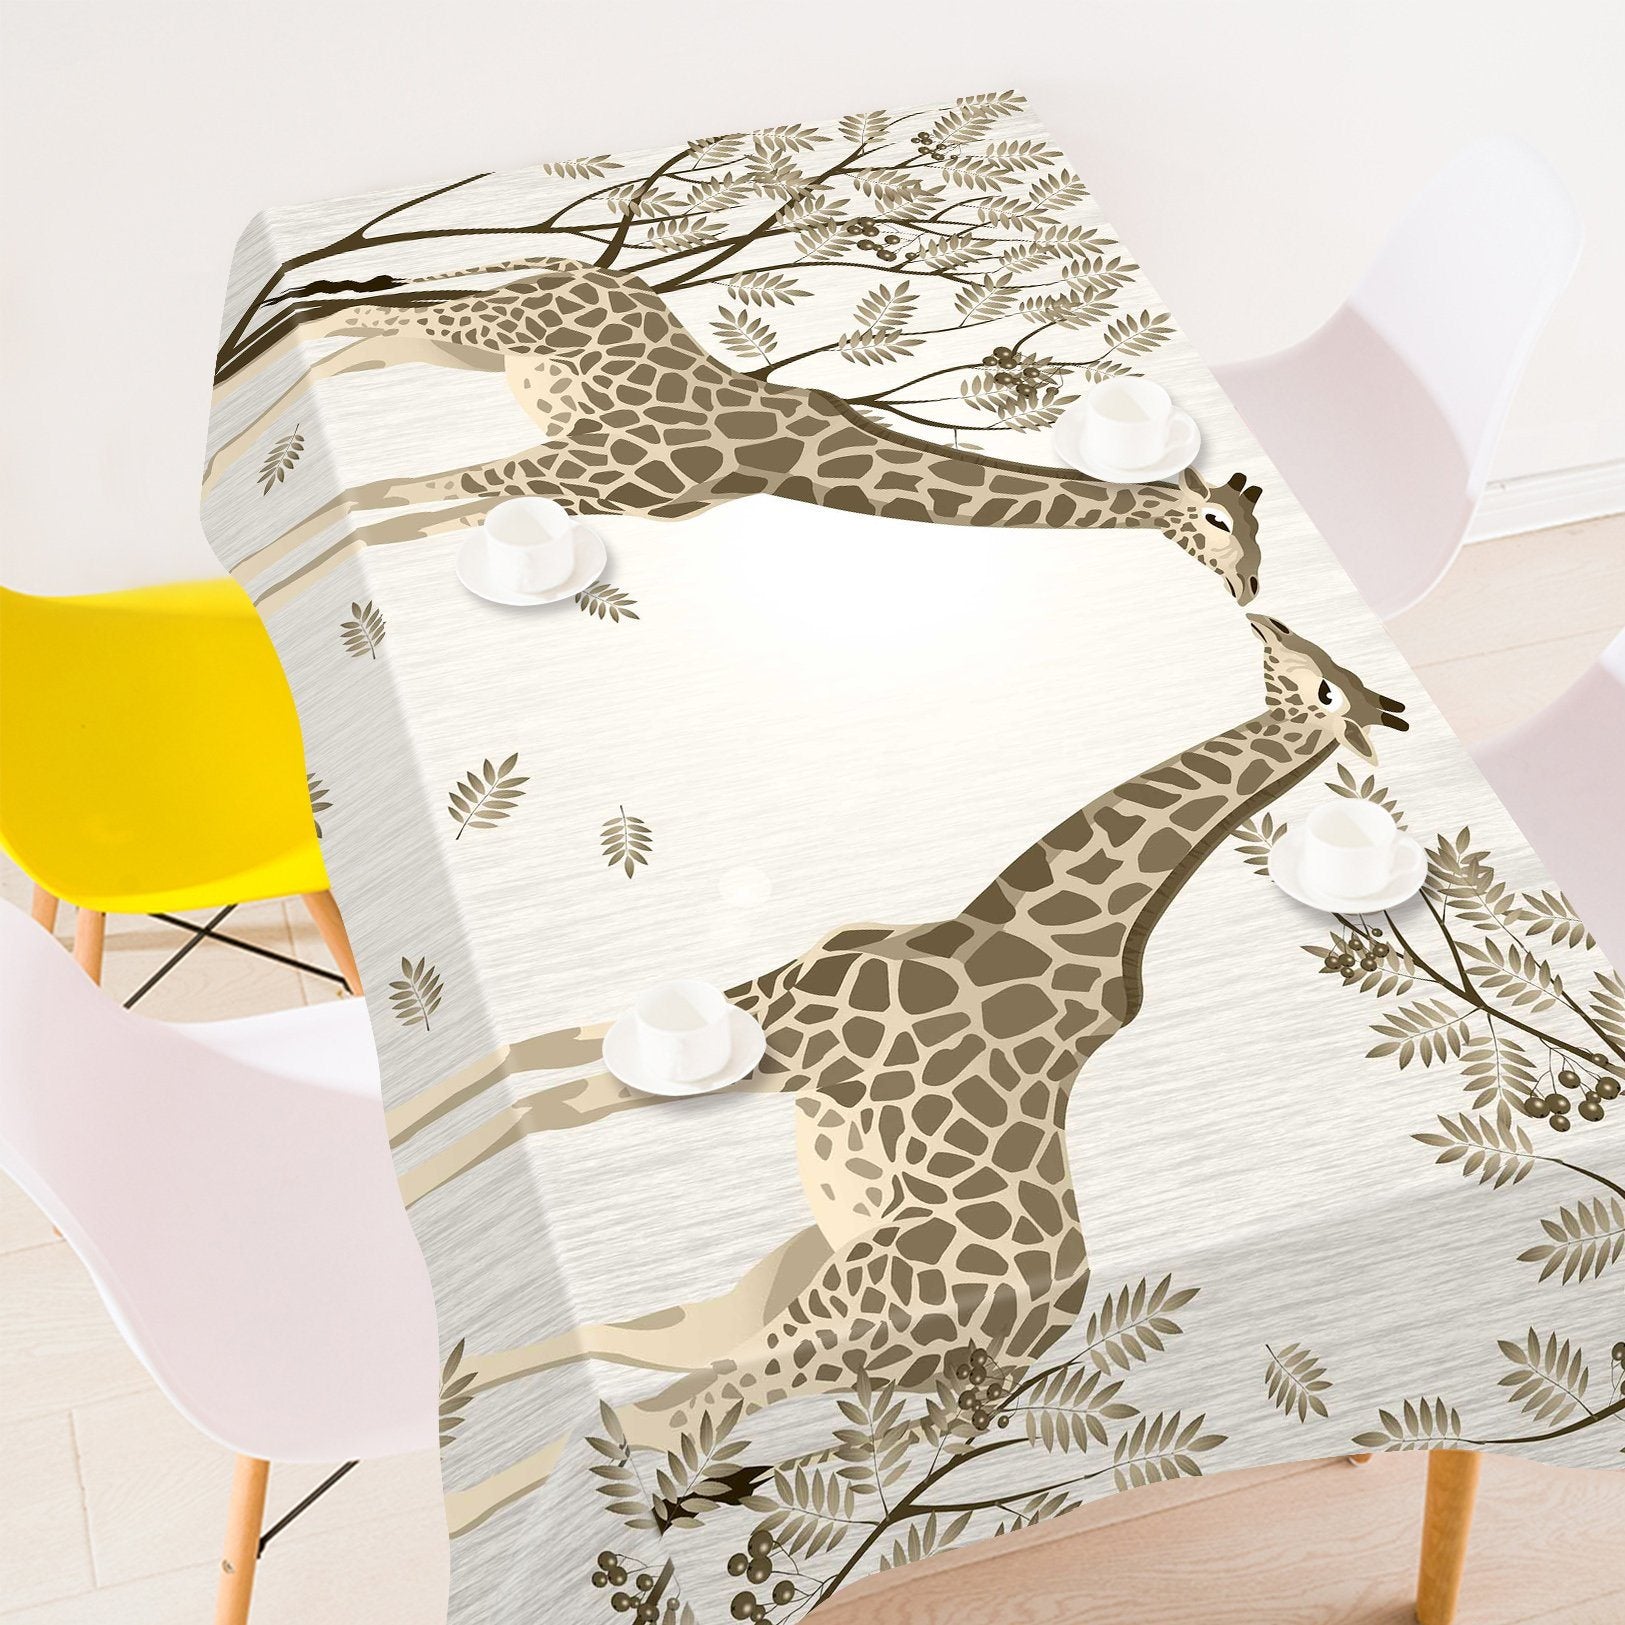 3D Lovely Giraffes 149 Tablecloths Wallpaper AJ Wallpaper 